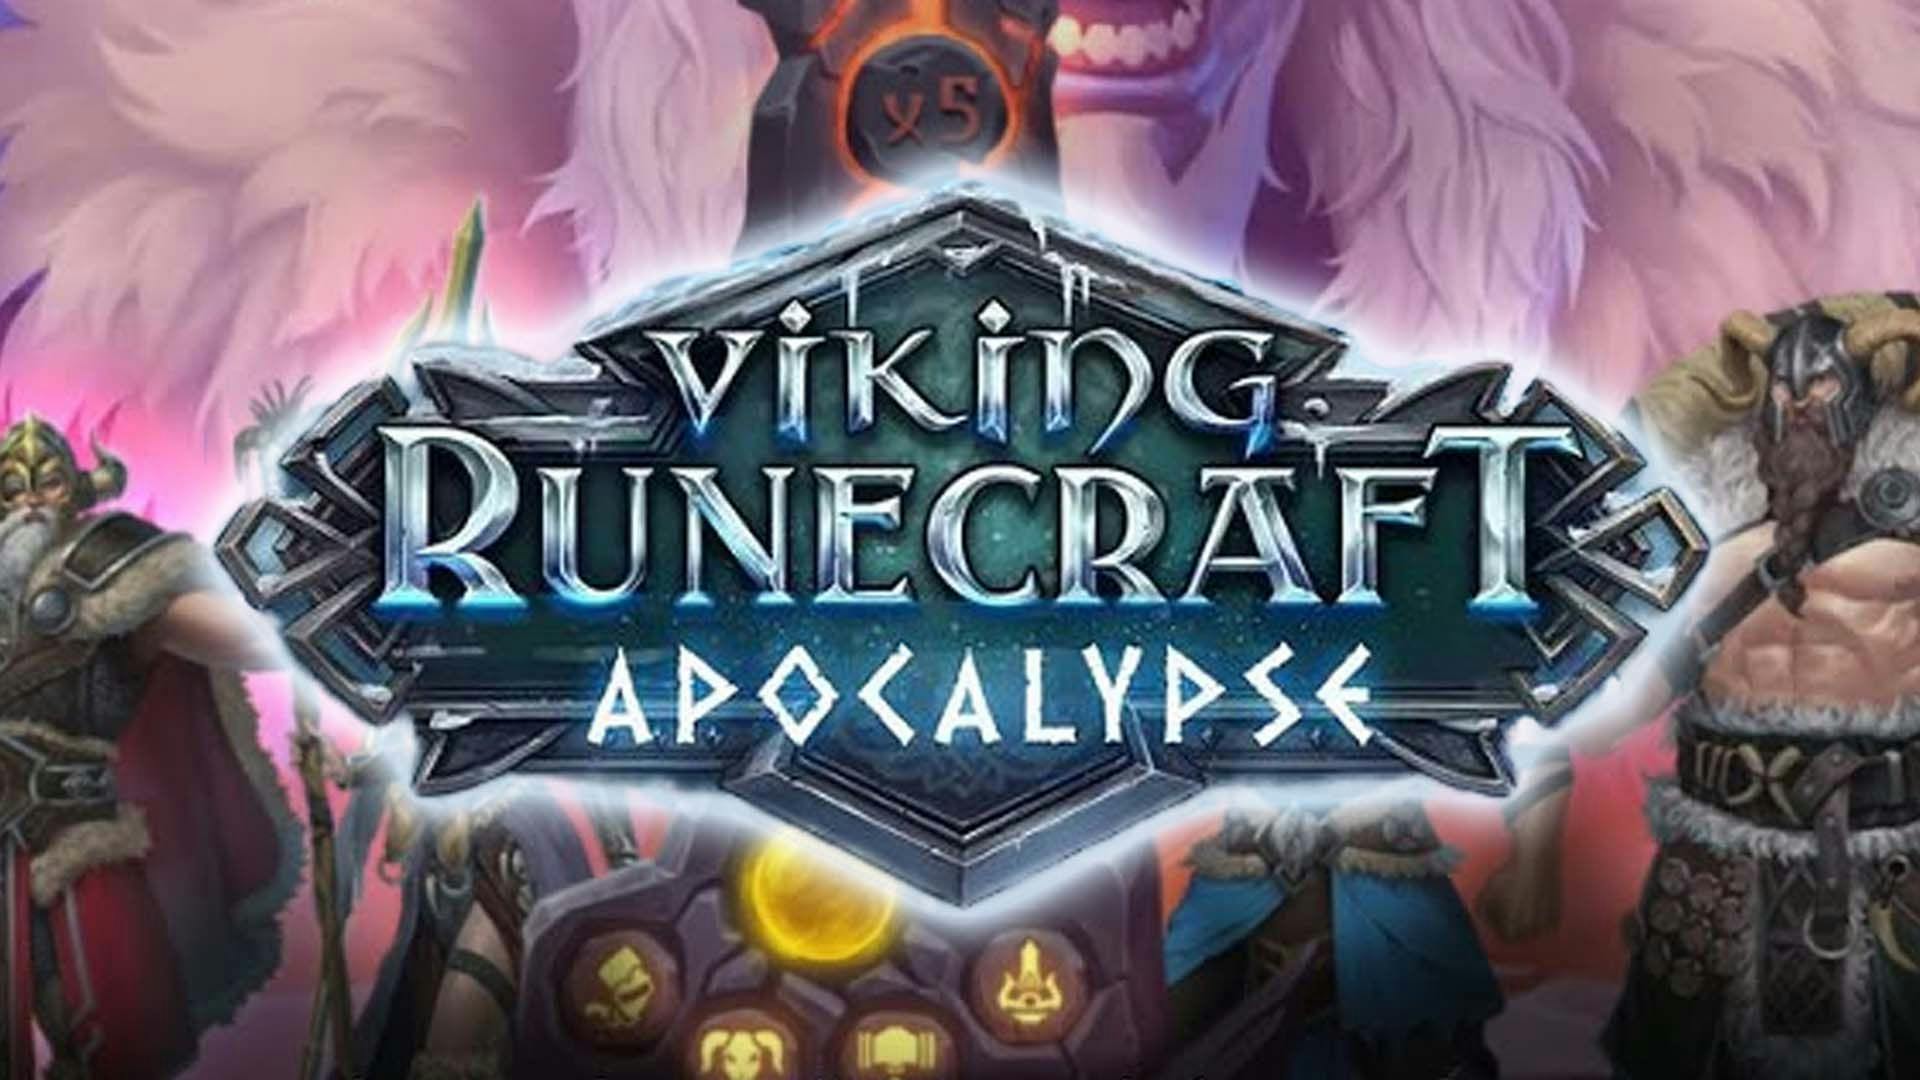 Viking Runecraft Apocalypse Slot Machine Online Free Game Play